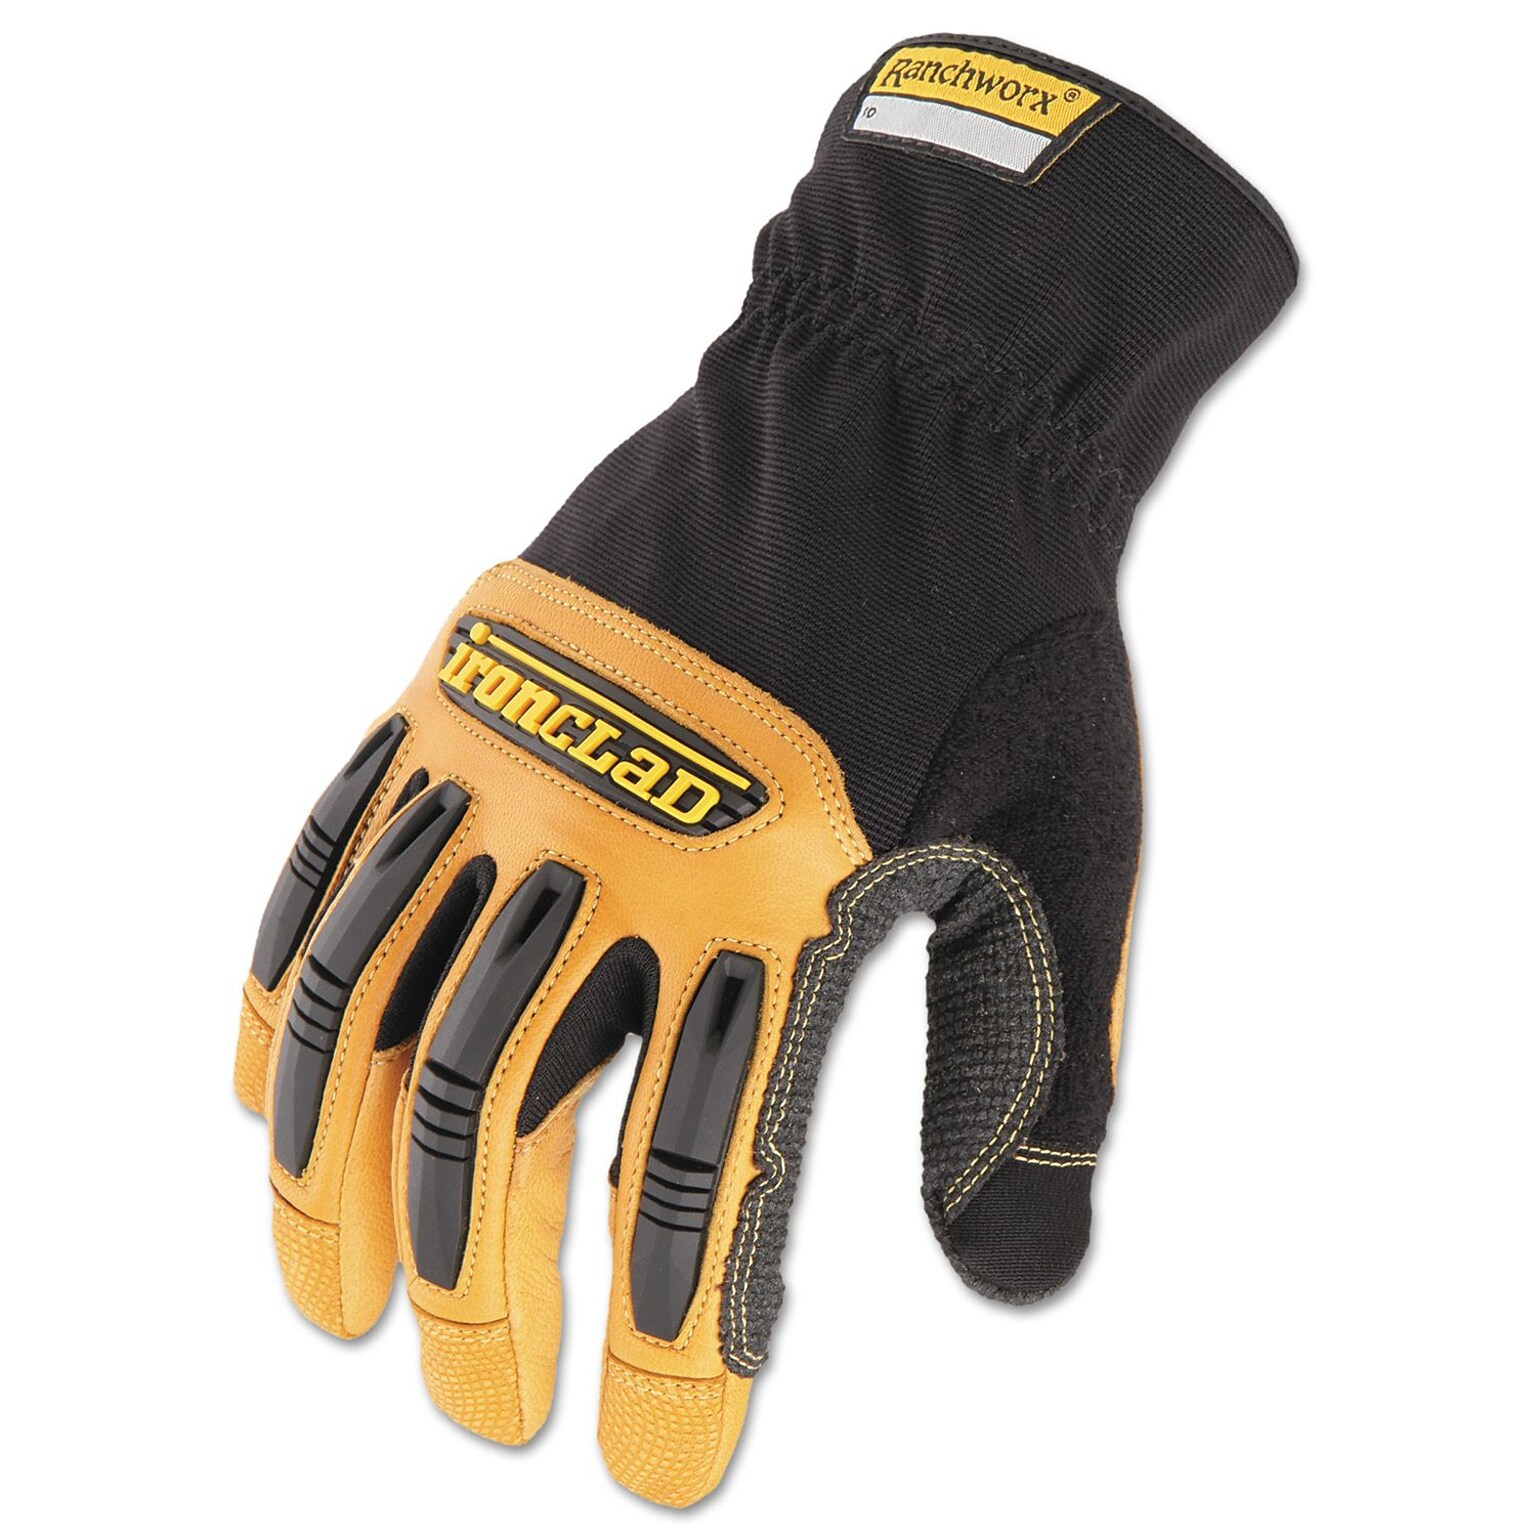 Ironclad Ranchworx Leather Gloves, Black/Tan, X-Large, 1 Pair (IRNRWG205XL)